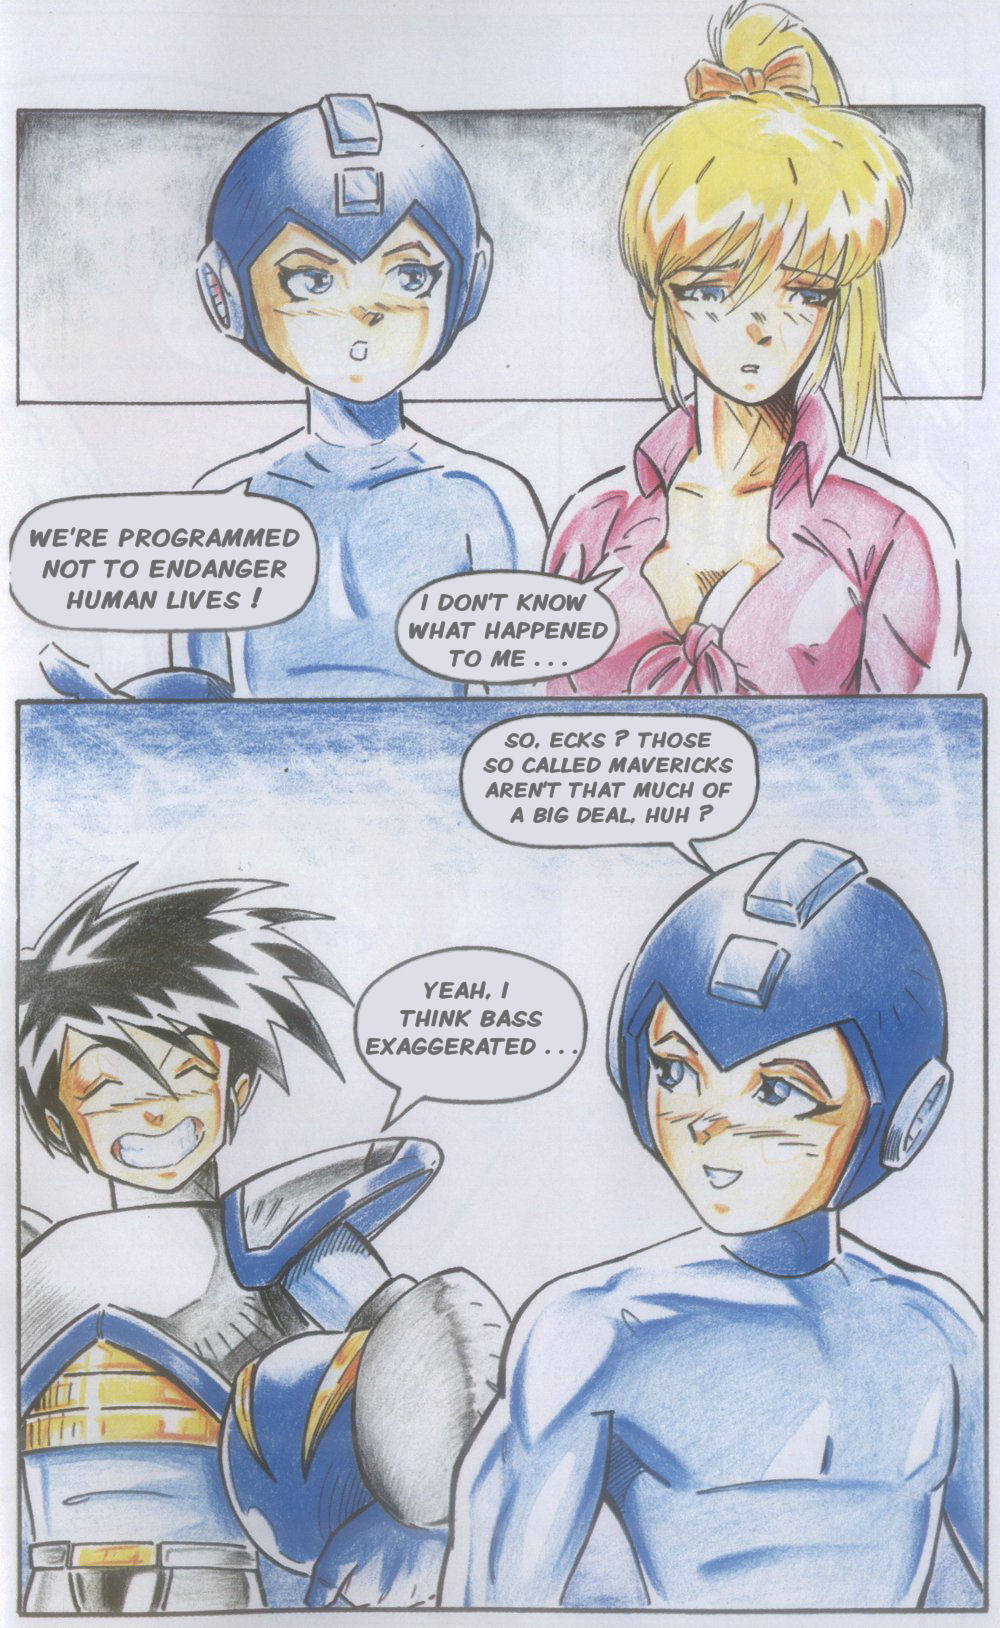 Novas Aventuras de Megaman Issue 10.